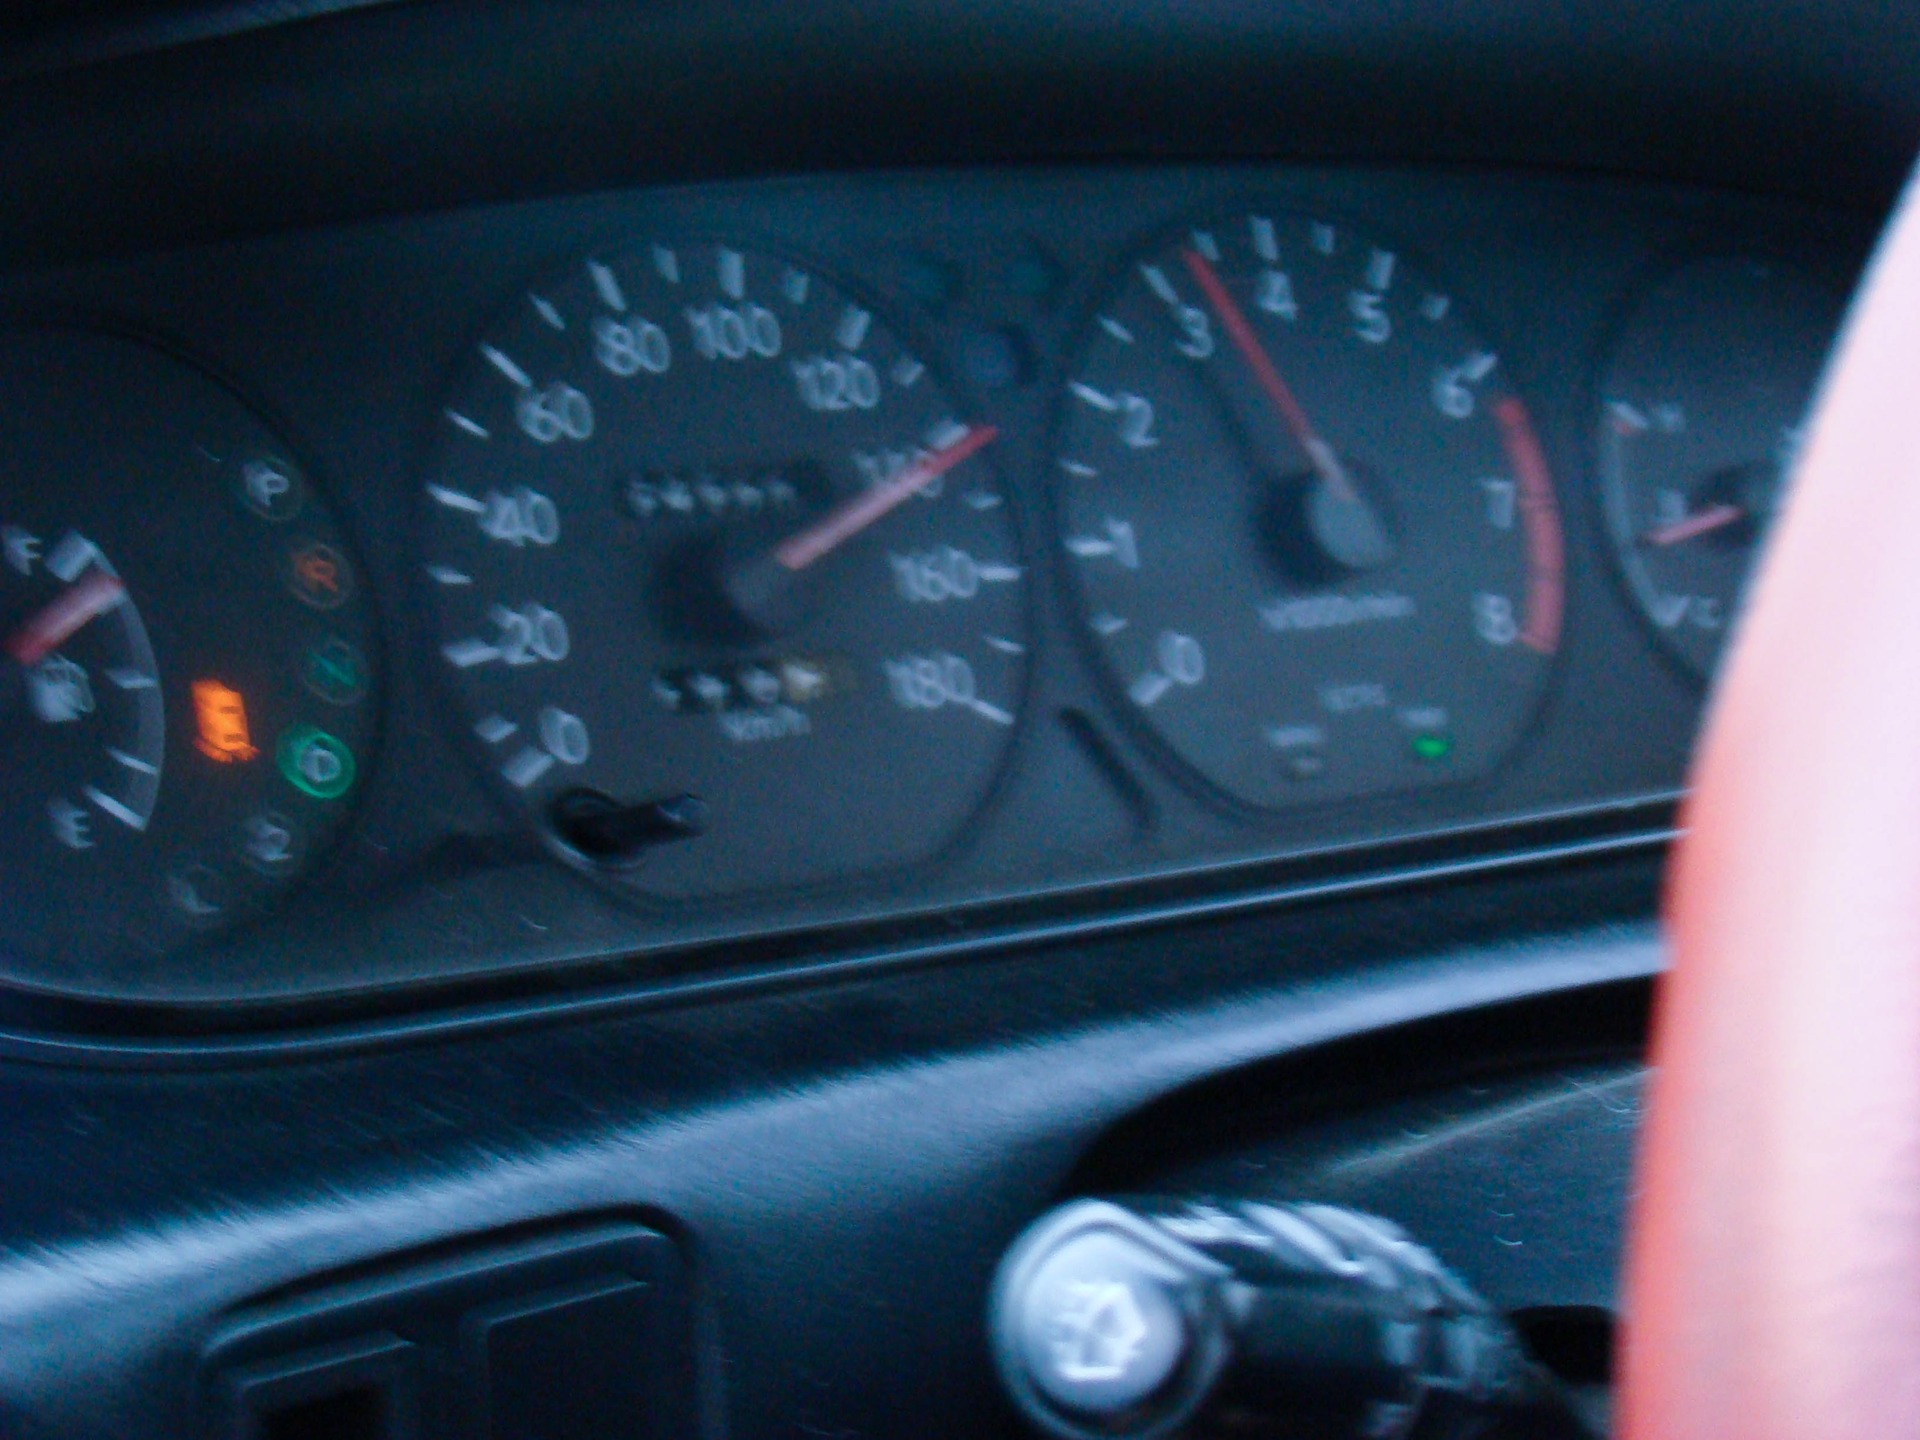 Test Drive Toyota Corolla Levin 16 1993